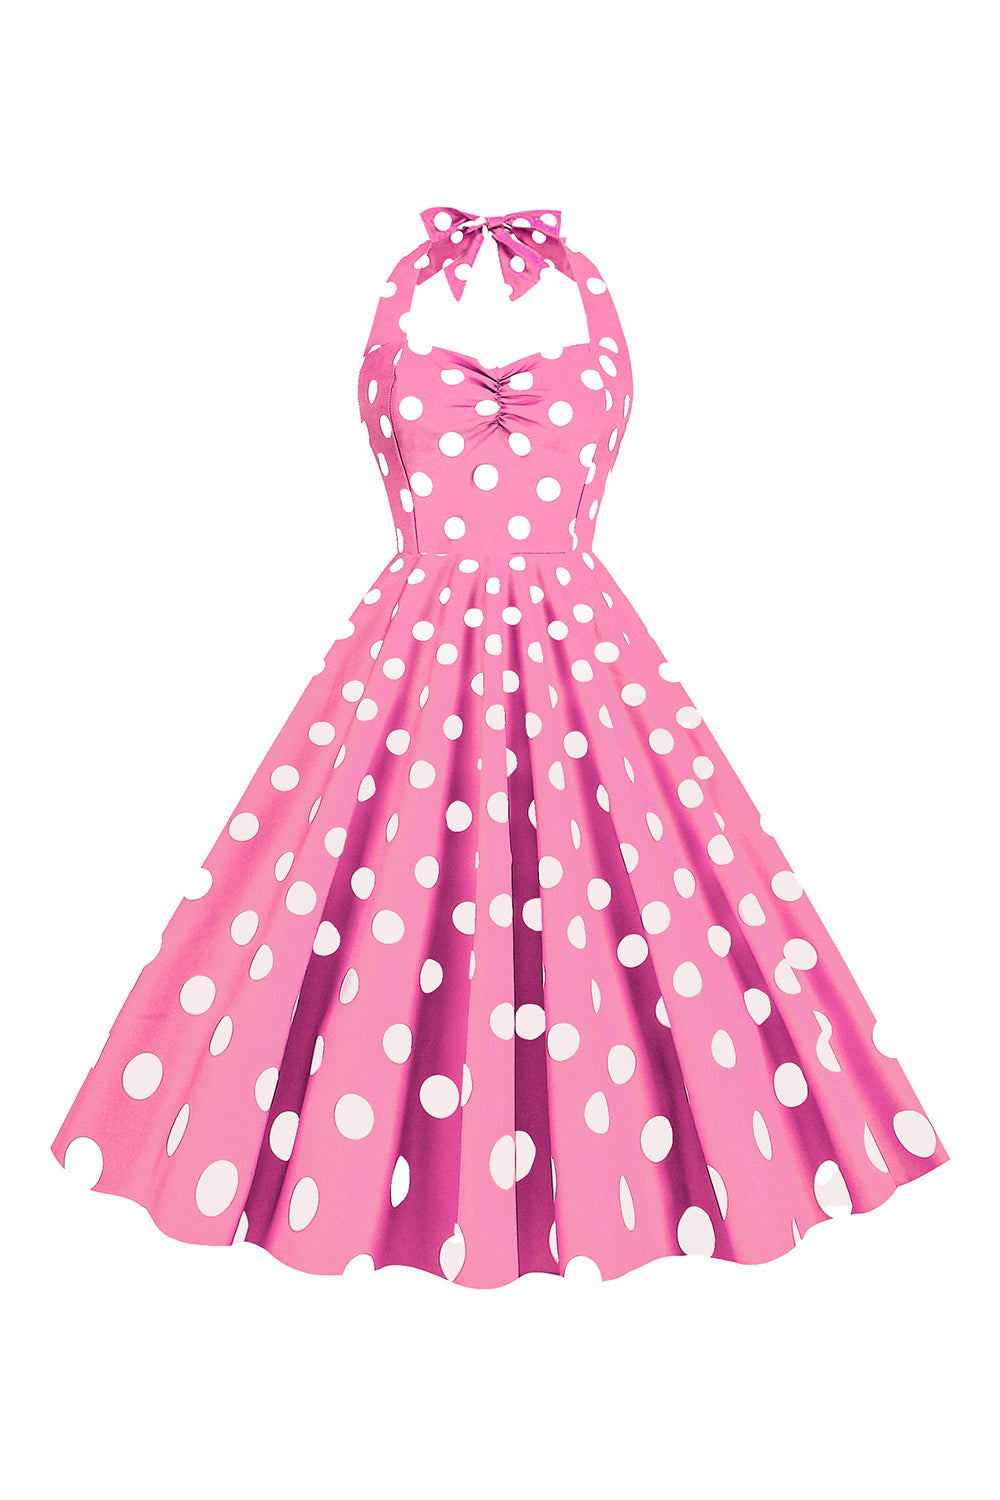 Różowe Groszki Pin Up Sukienka Retro Lata 50